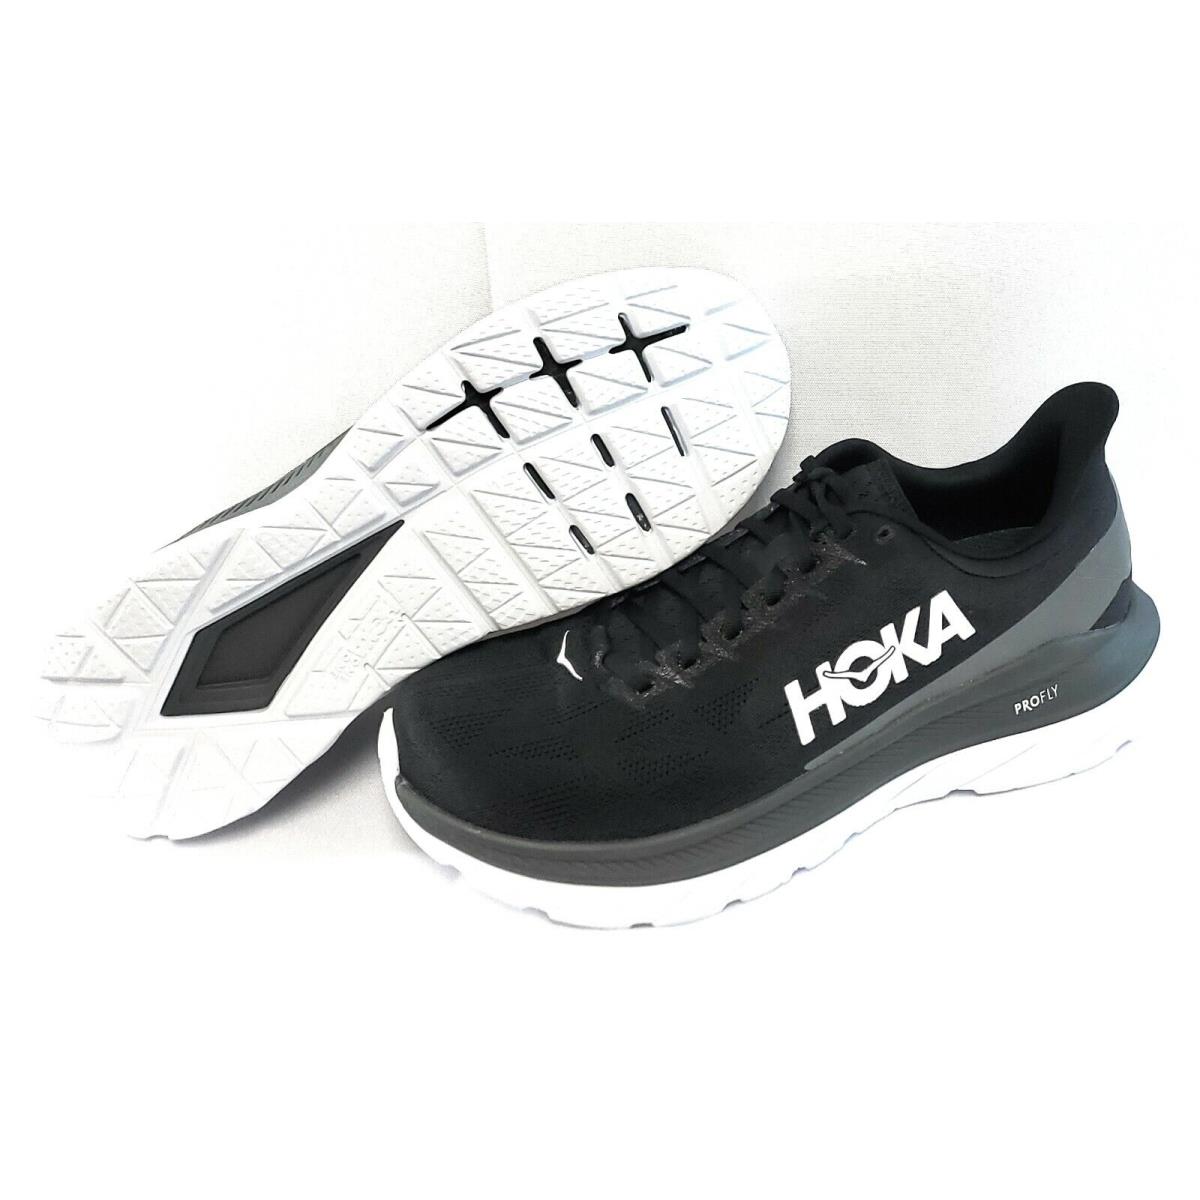 Womens Hoka One One Mach 4 1113529 Bdsd Black White Running Sneakers Shoes - Black